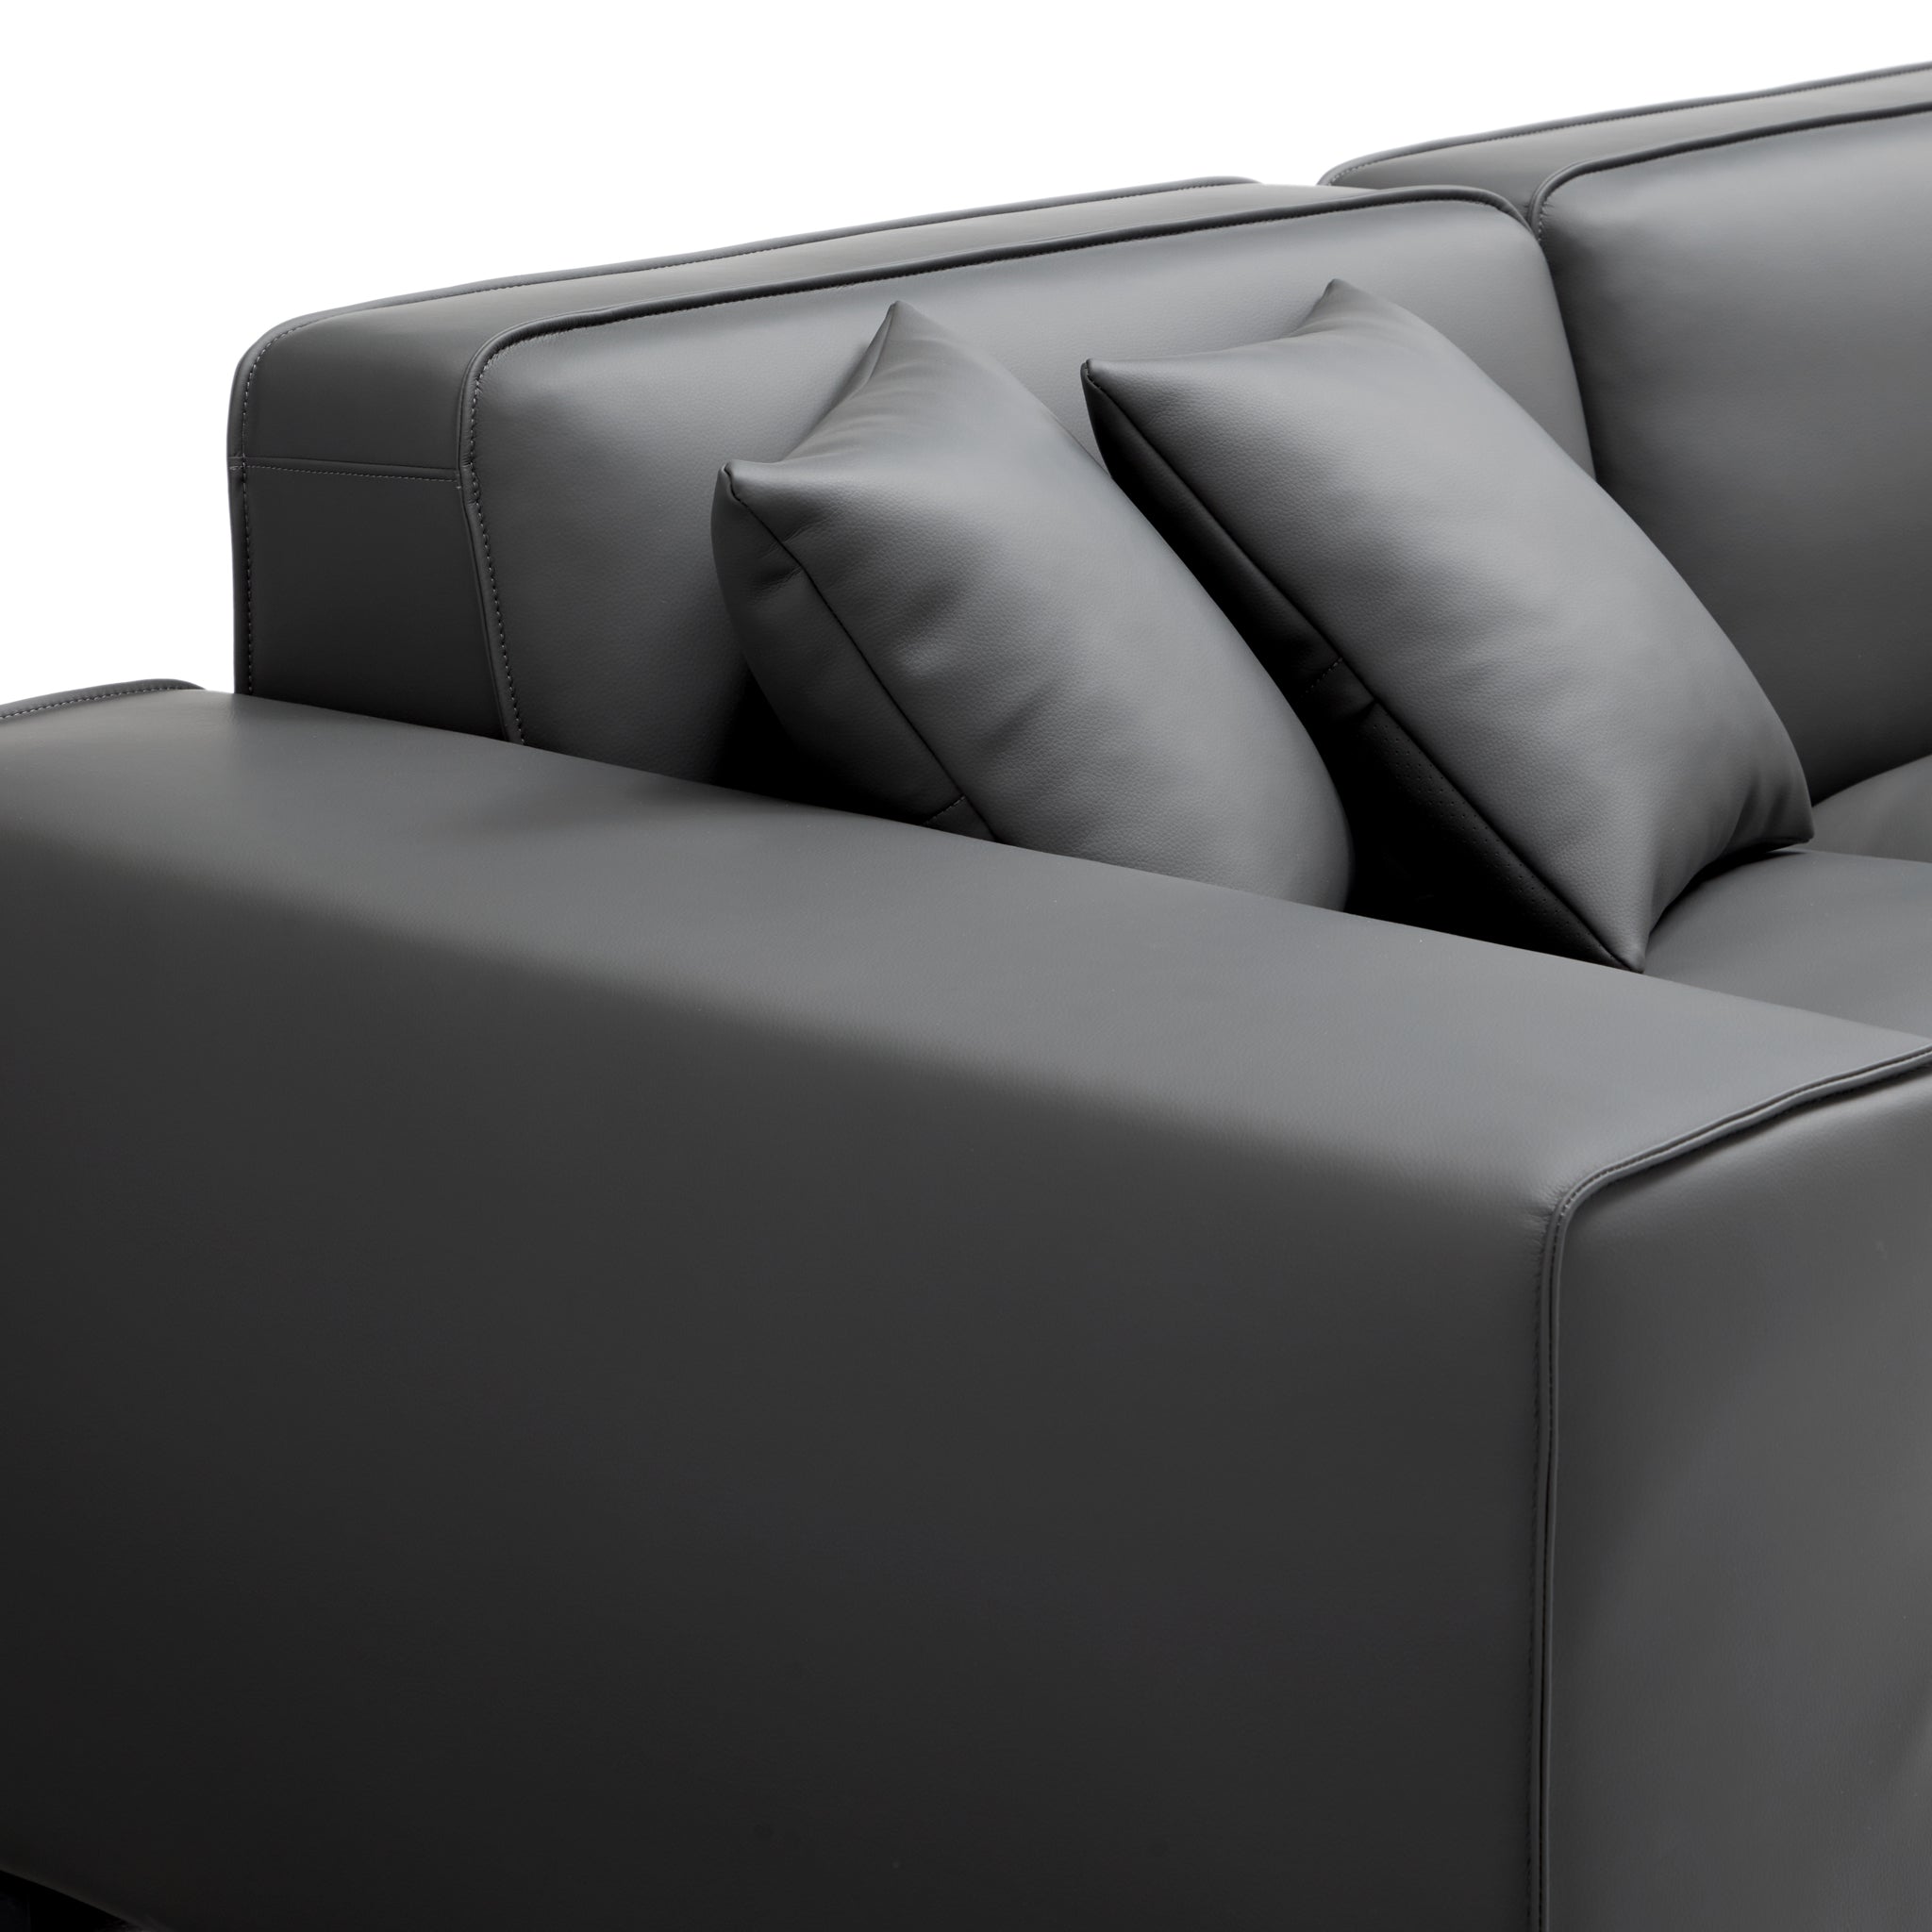 Domus Modular Dark Gray Leather Sectional Sofa